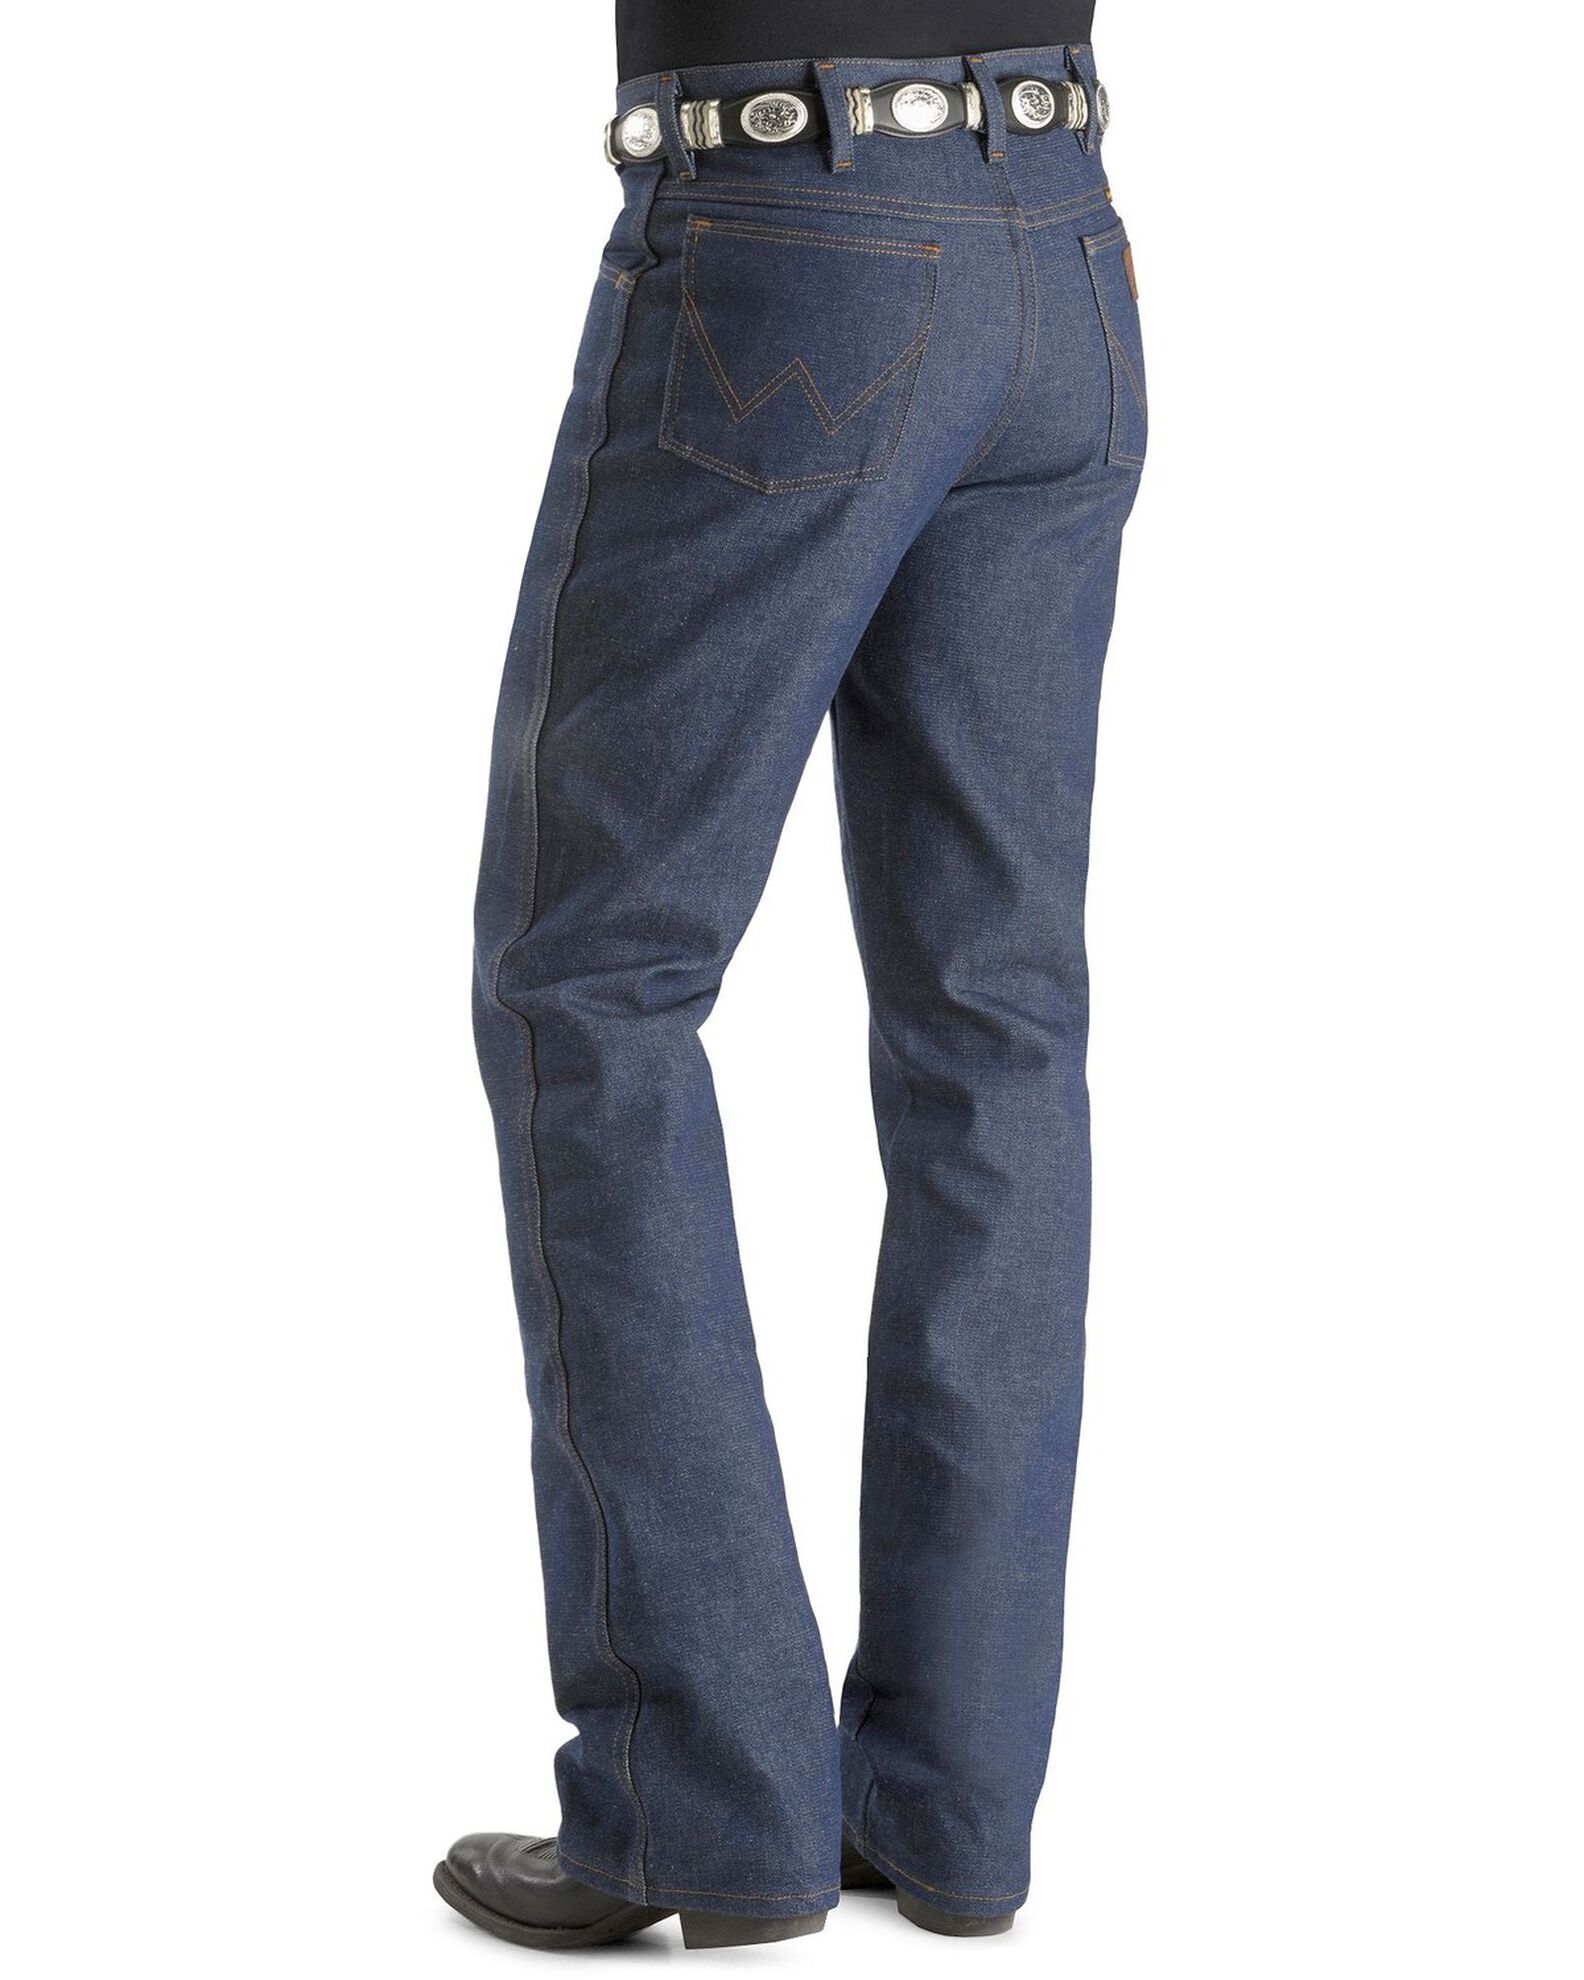 Wrangler 945 Cowboy Cut Rigid Regular Fit Jeans | Boot Barn